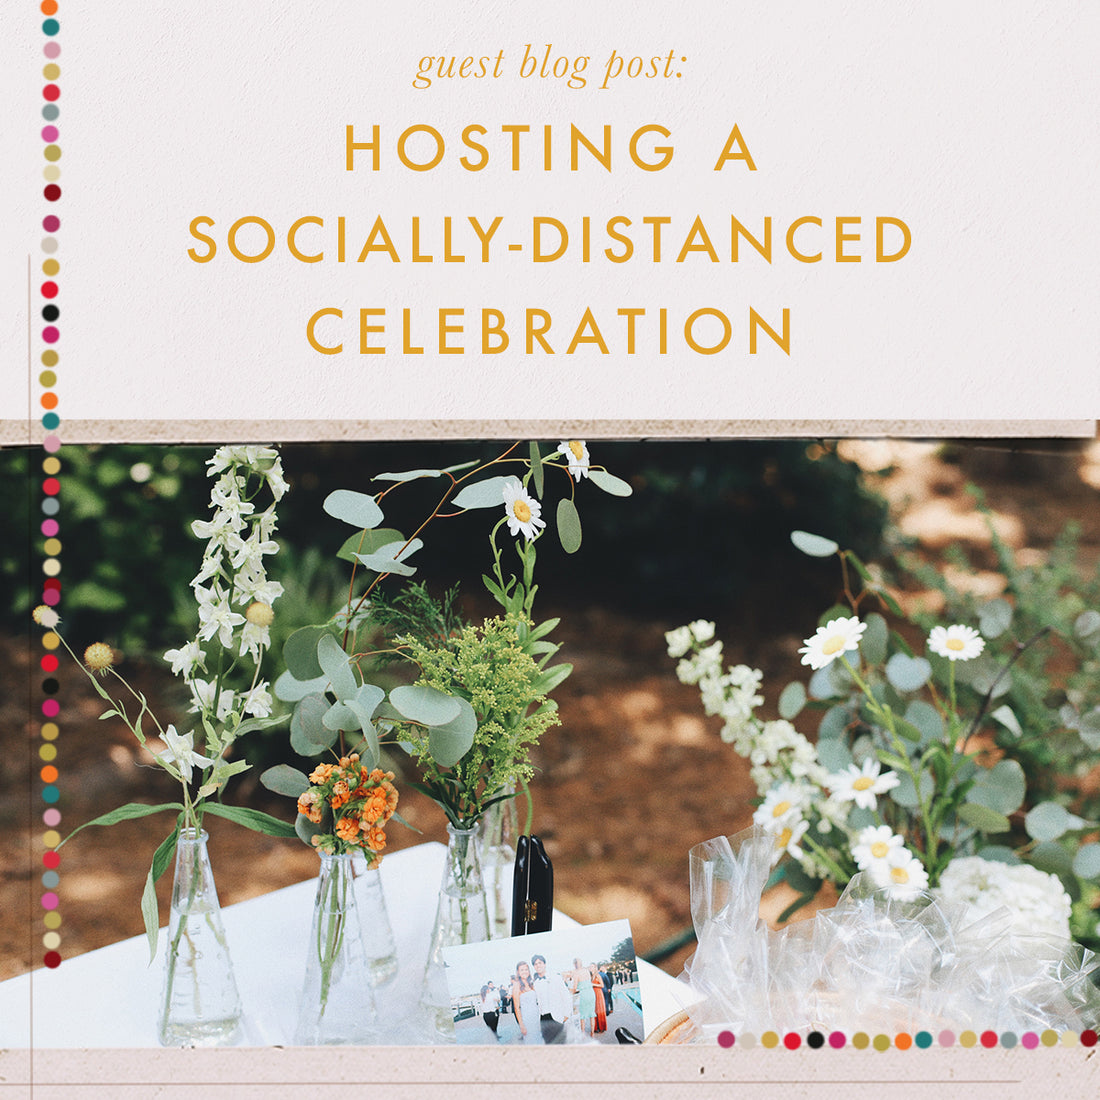 Hosting a Socially-Distanced Celebration